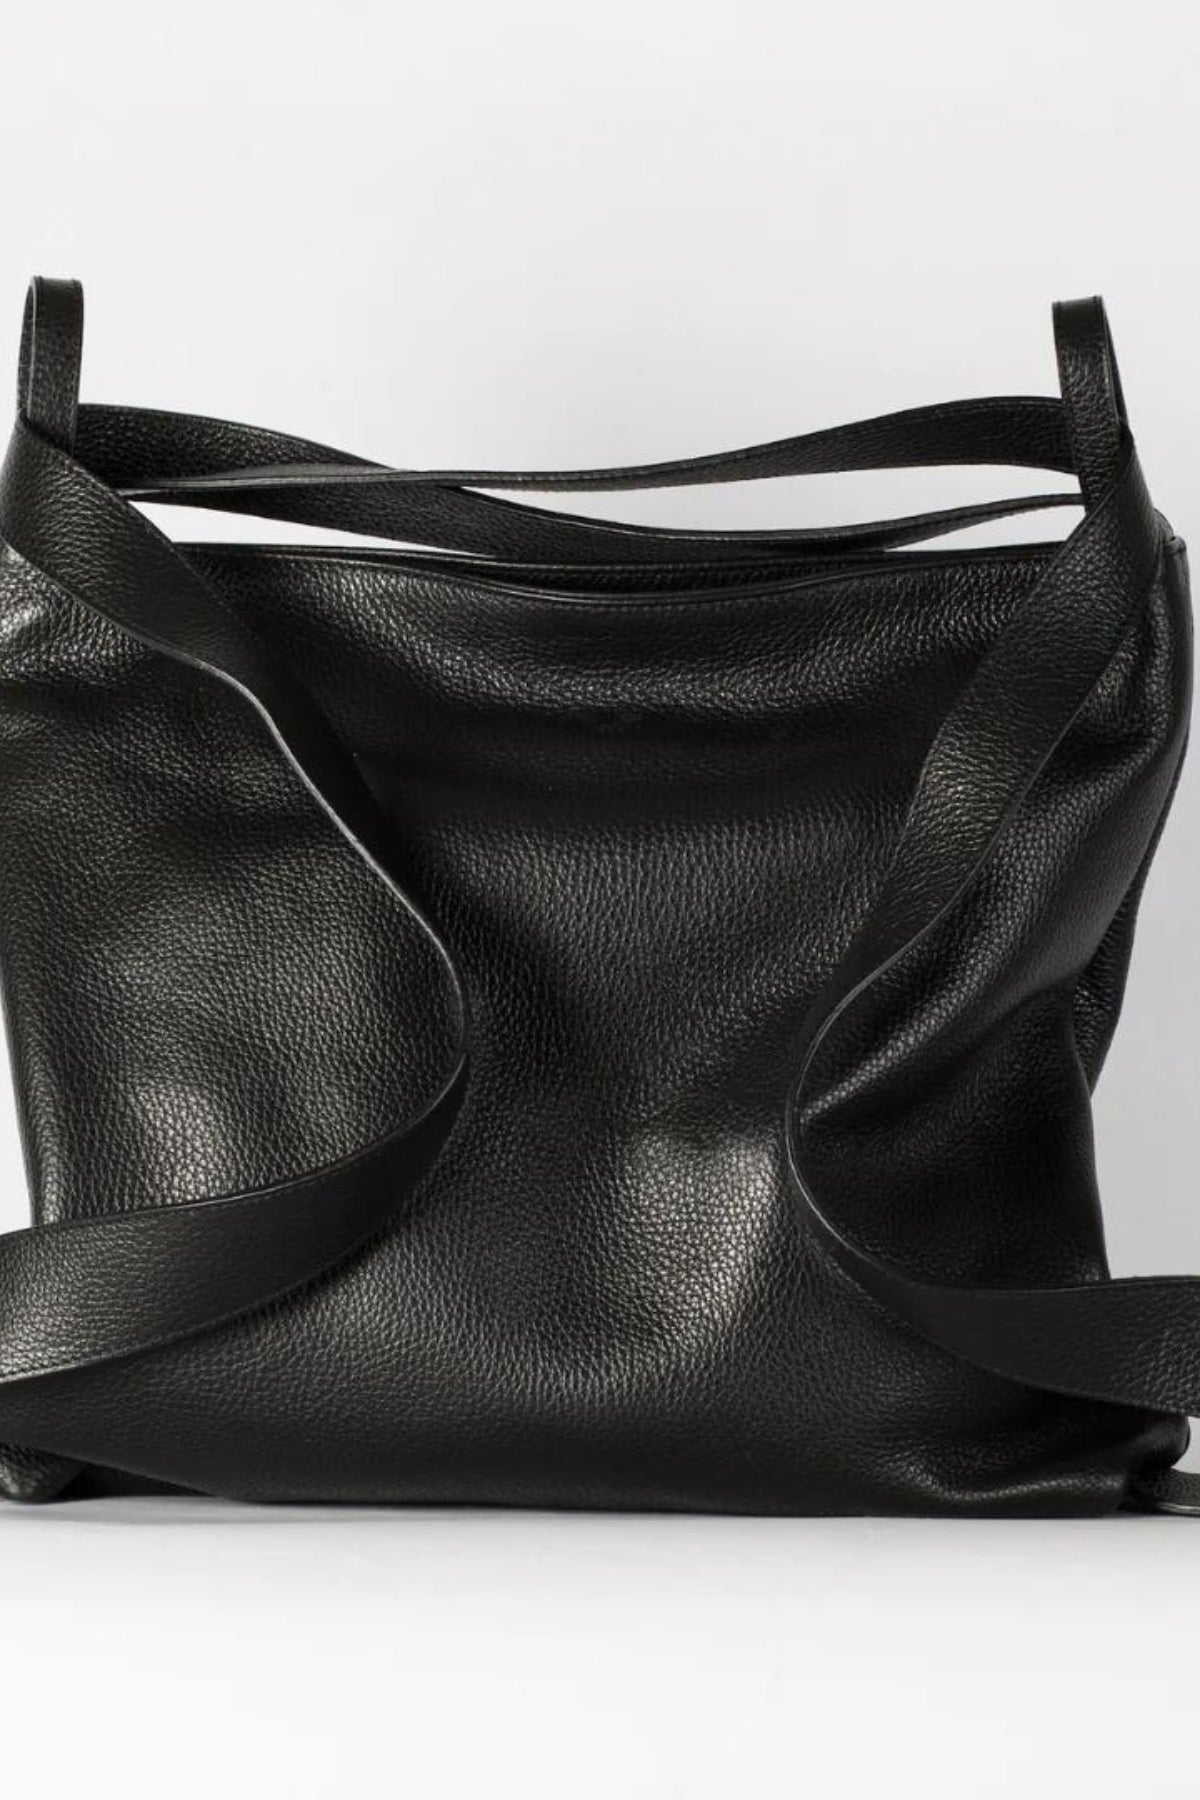 Bella XL Black 2-in-1 Convertible Backpack Tote